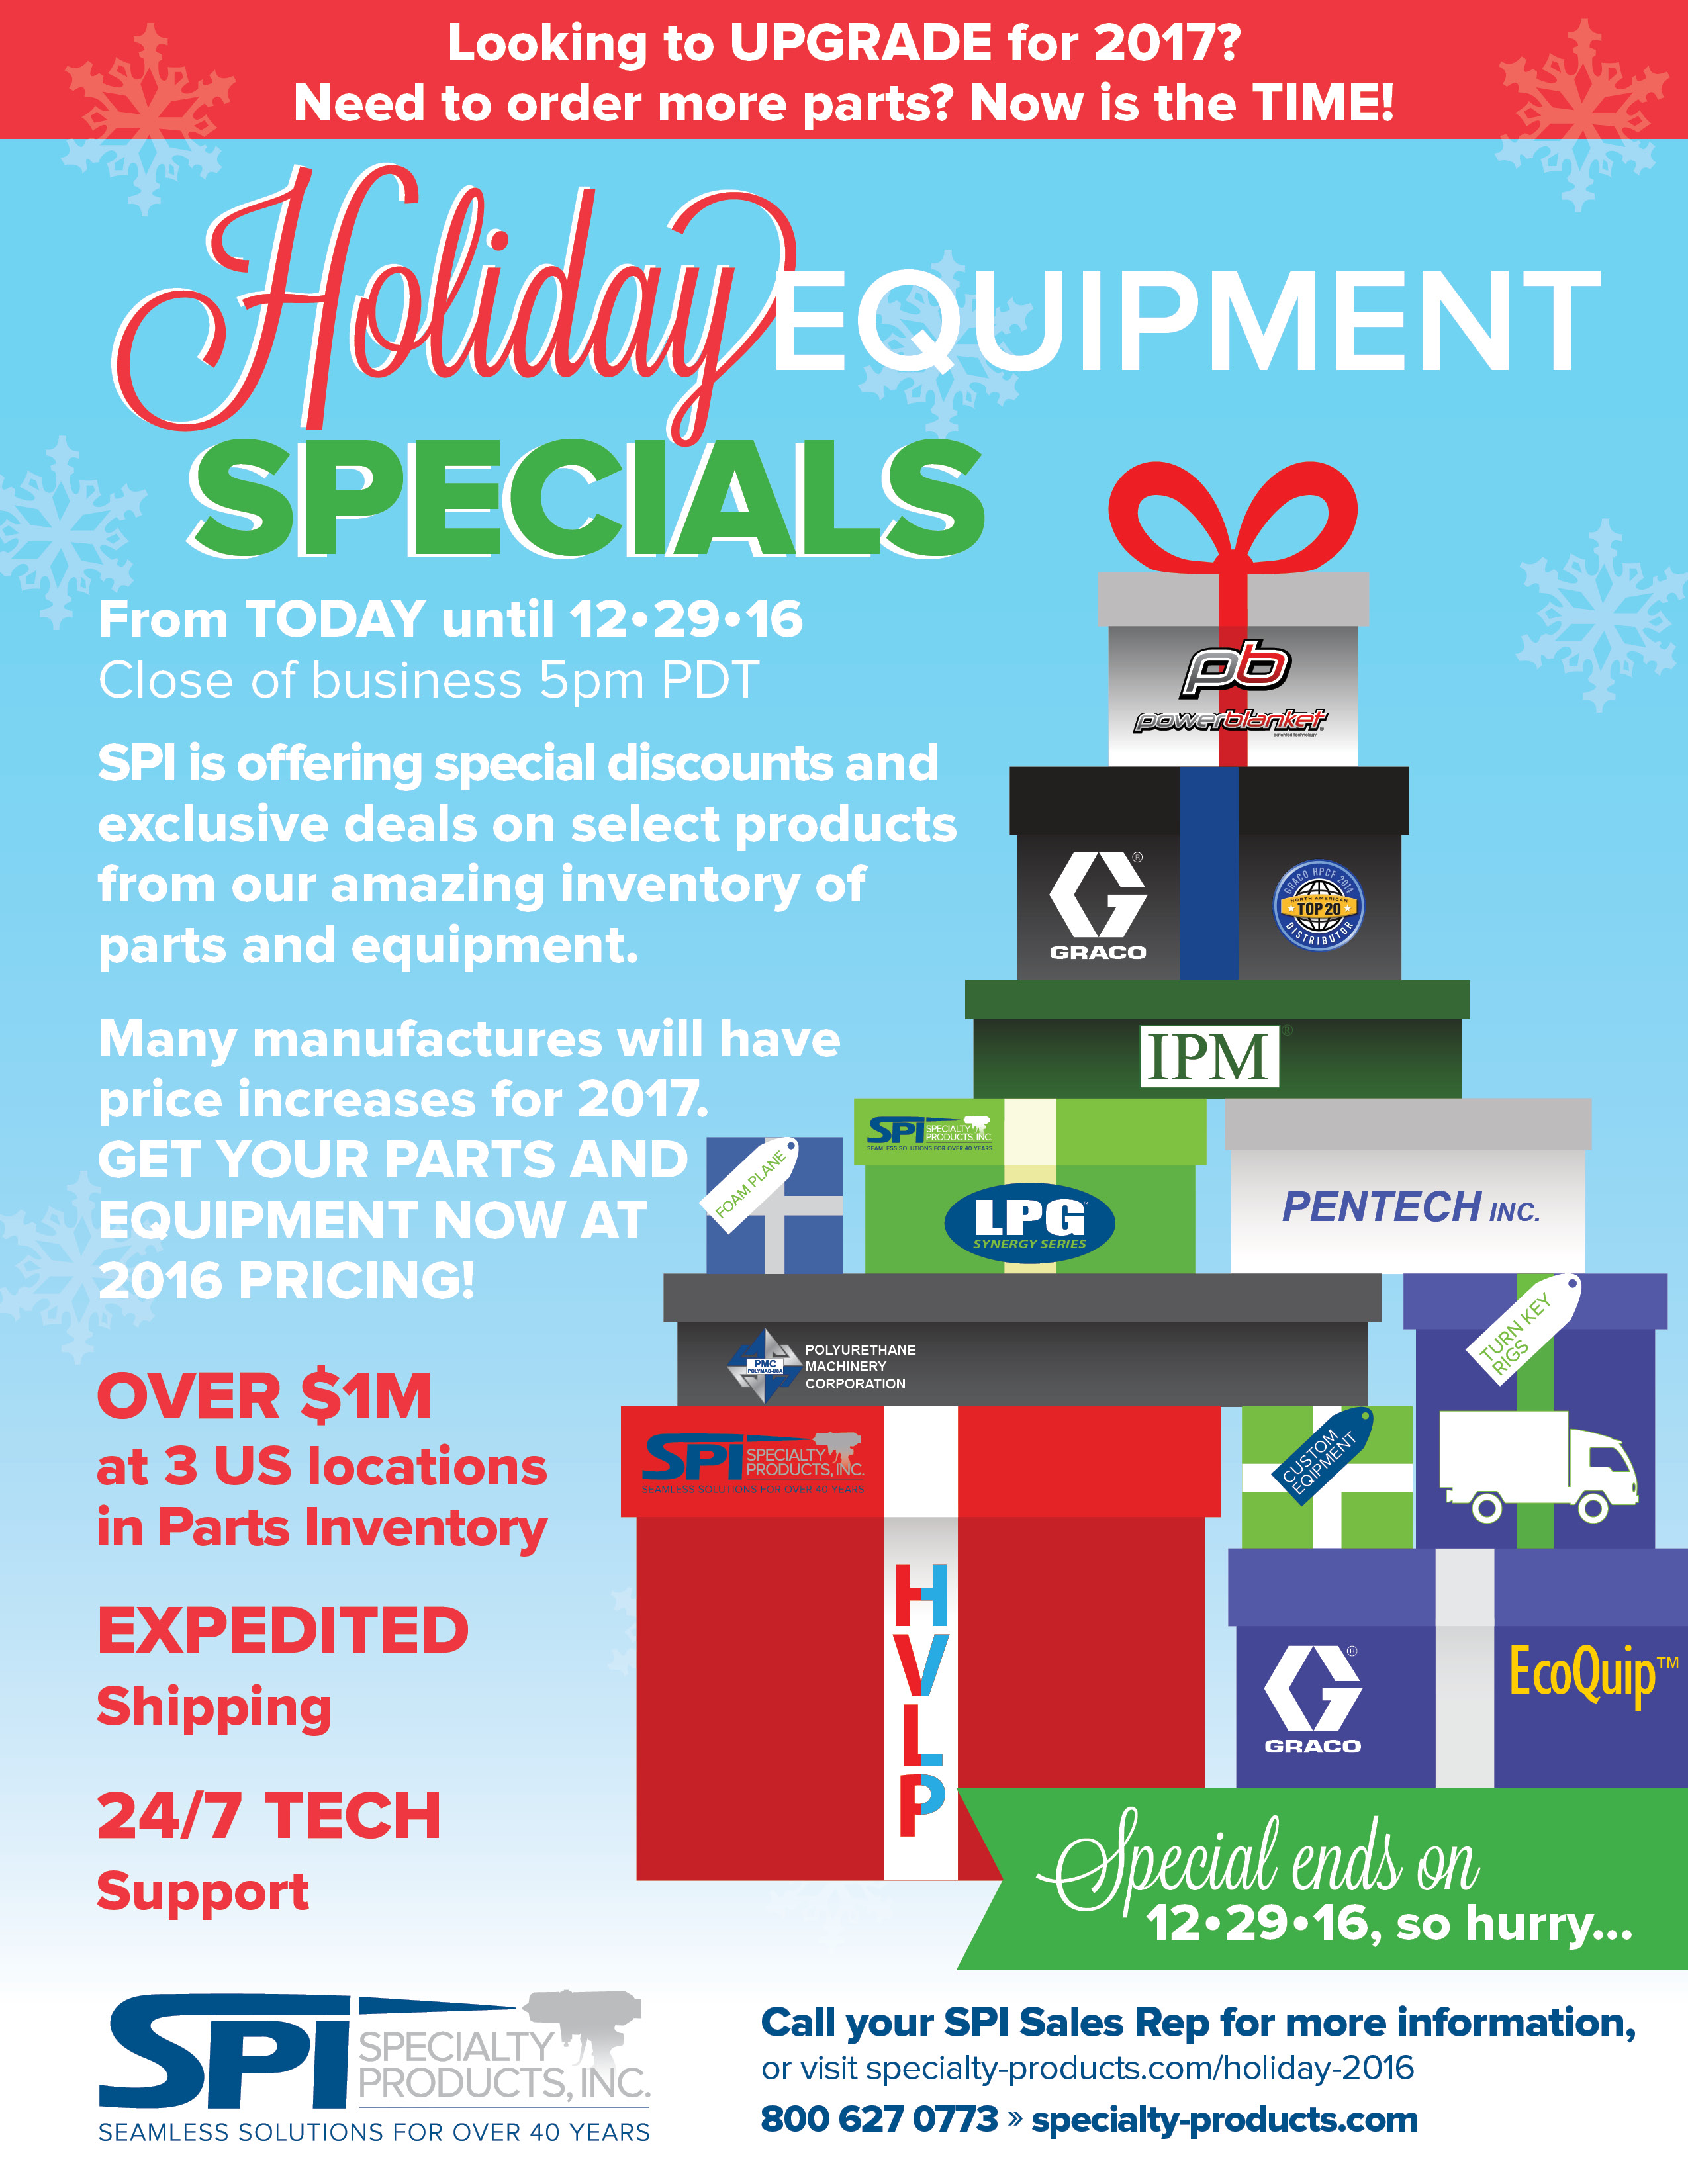 Holiday-2016 equipment specials